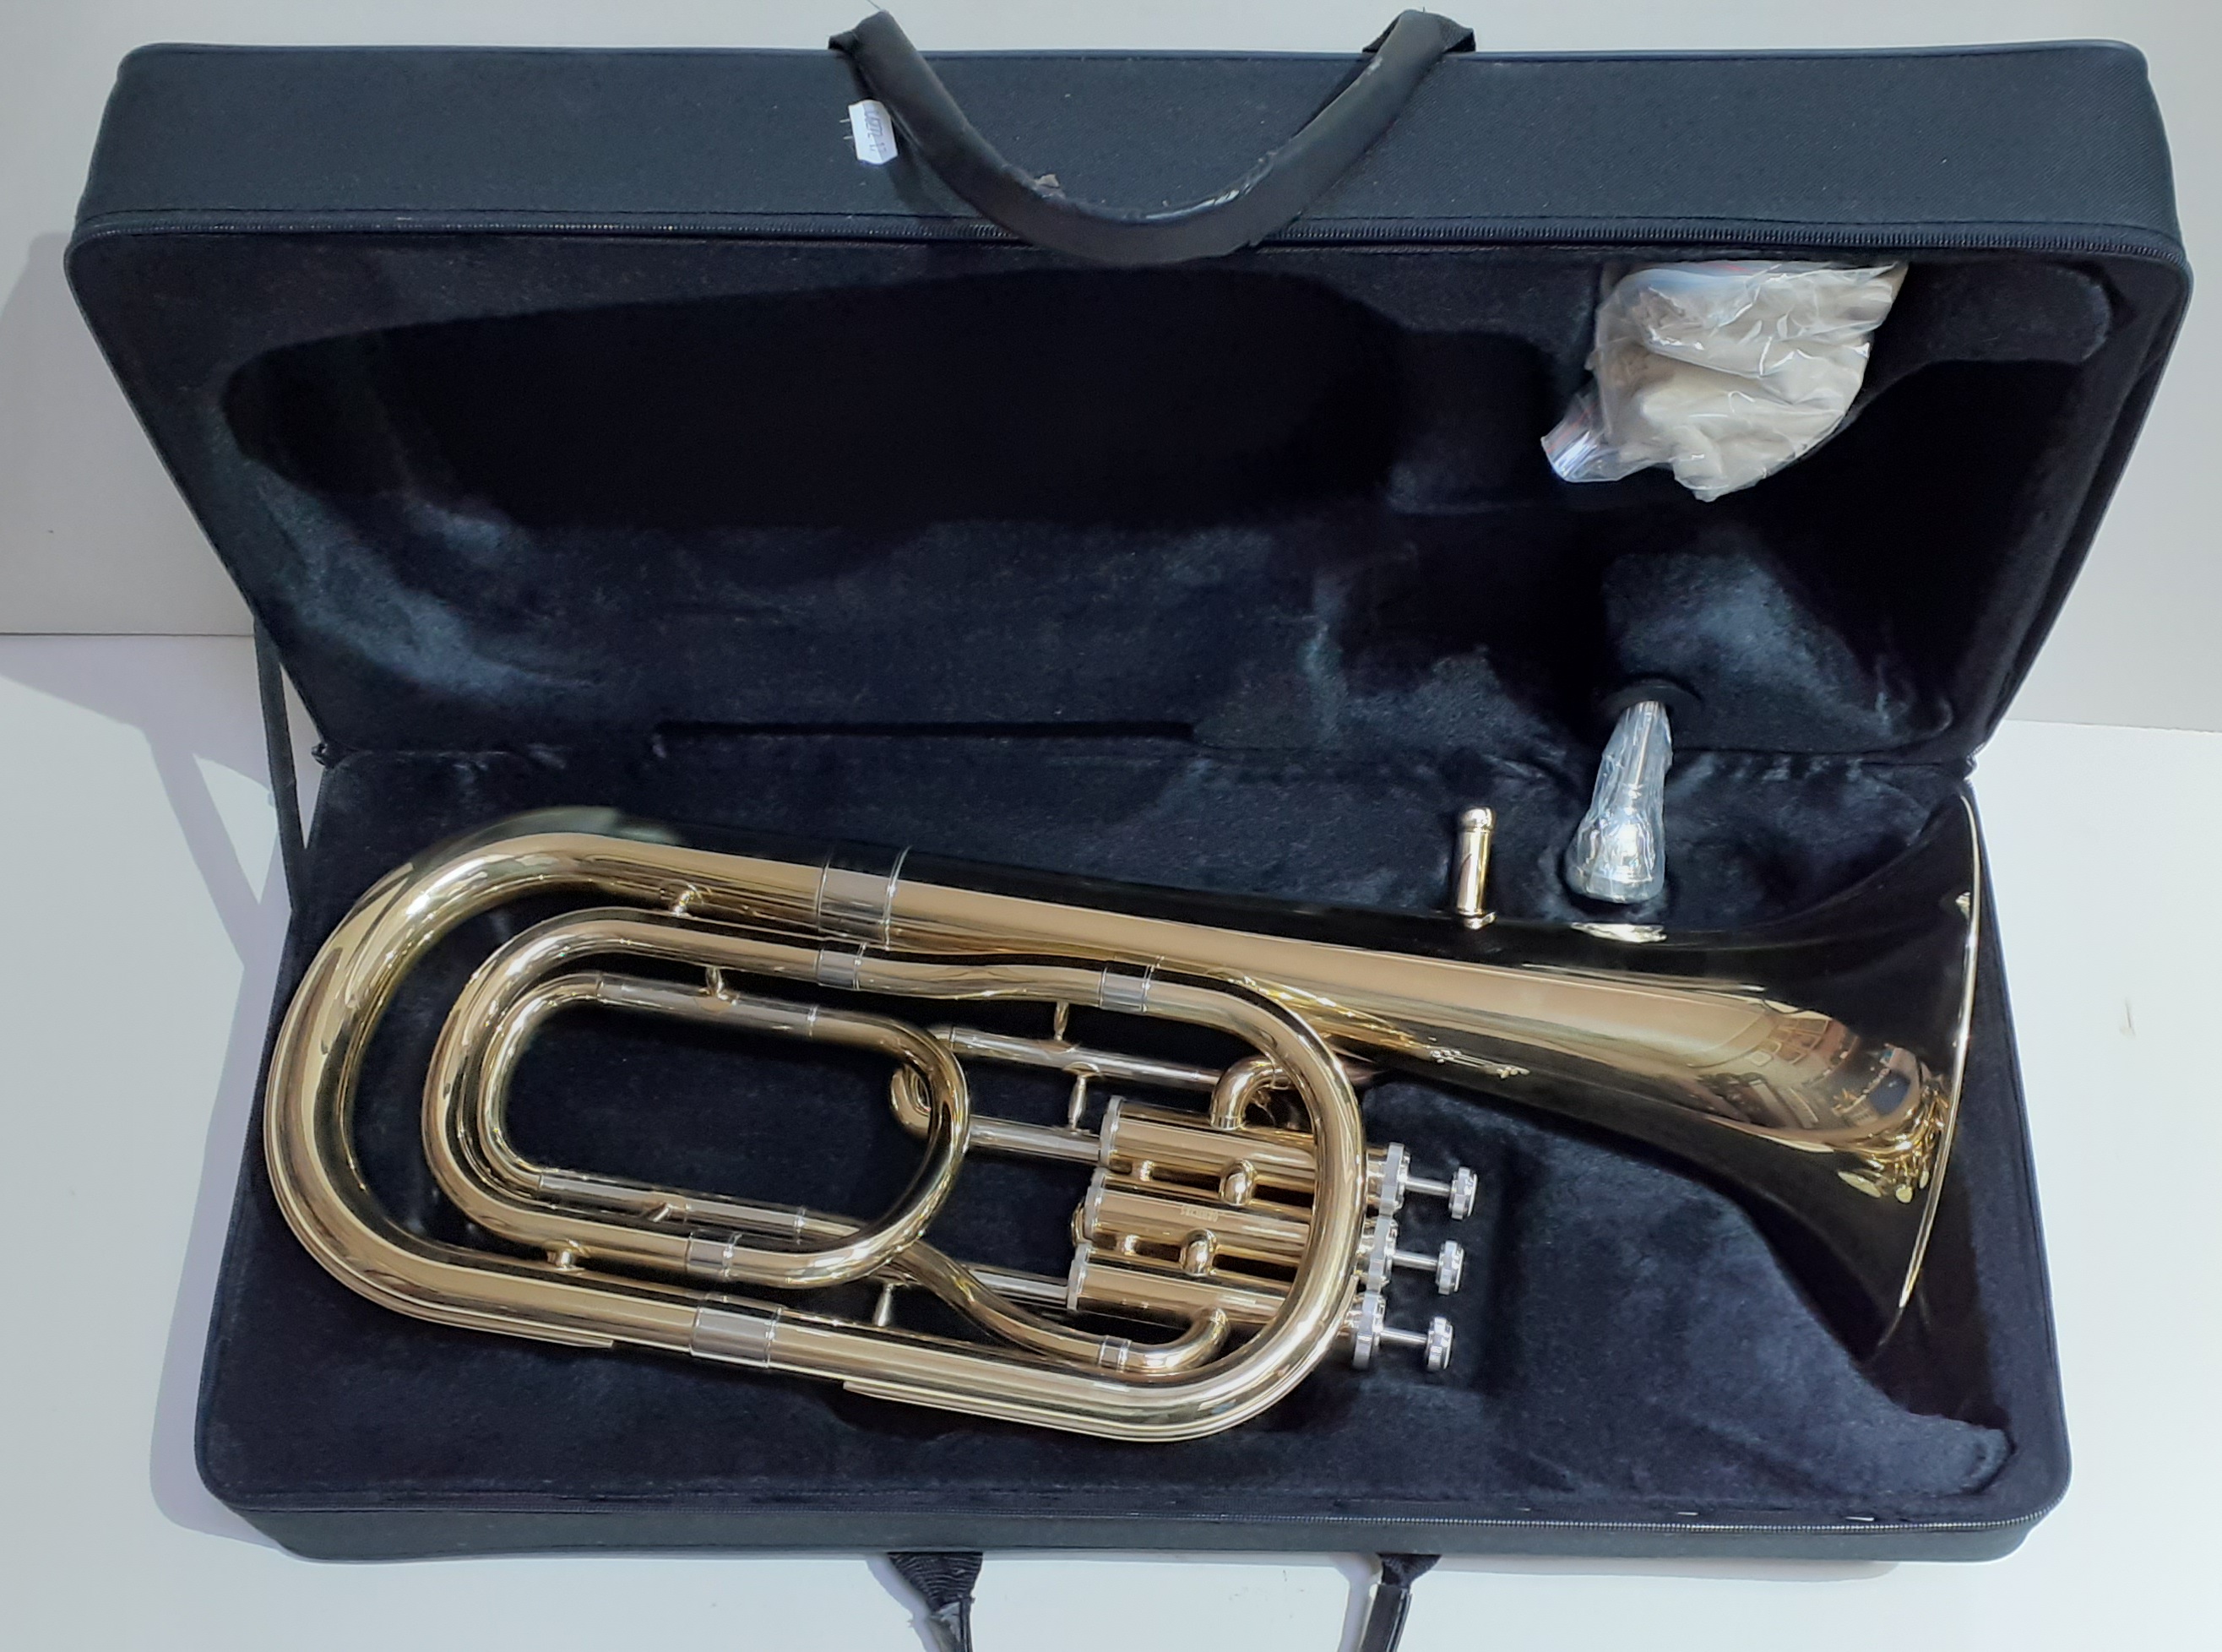 A Rosetti 5 series brass baritone horn, with nickel valves, in original case.